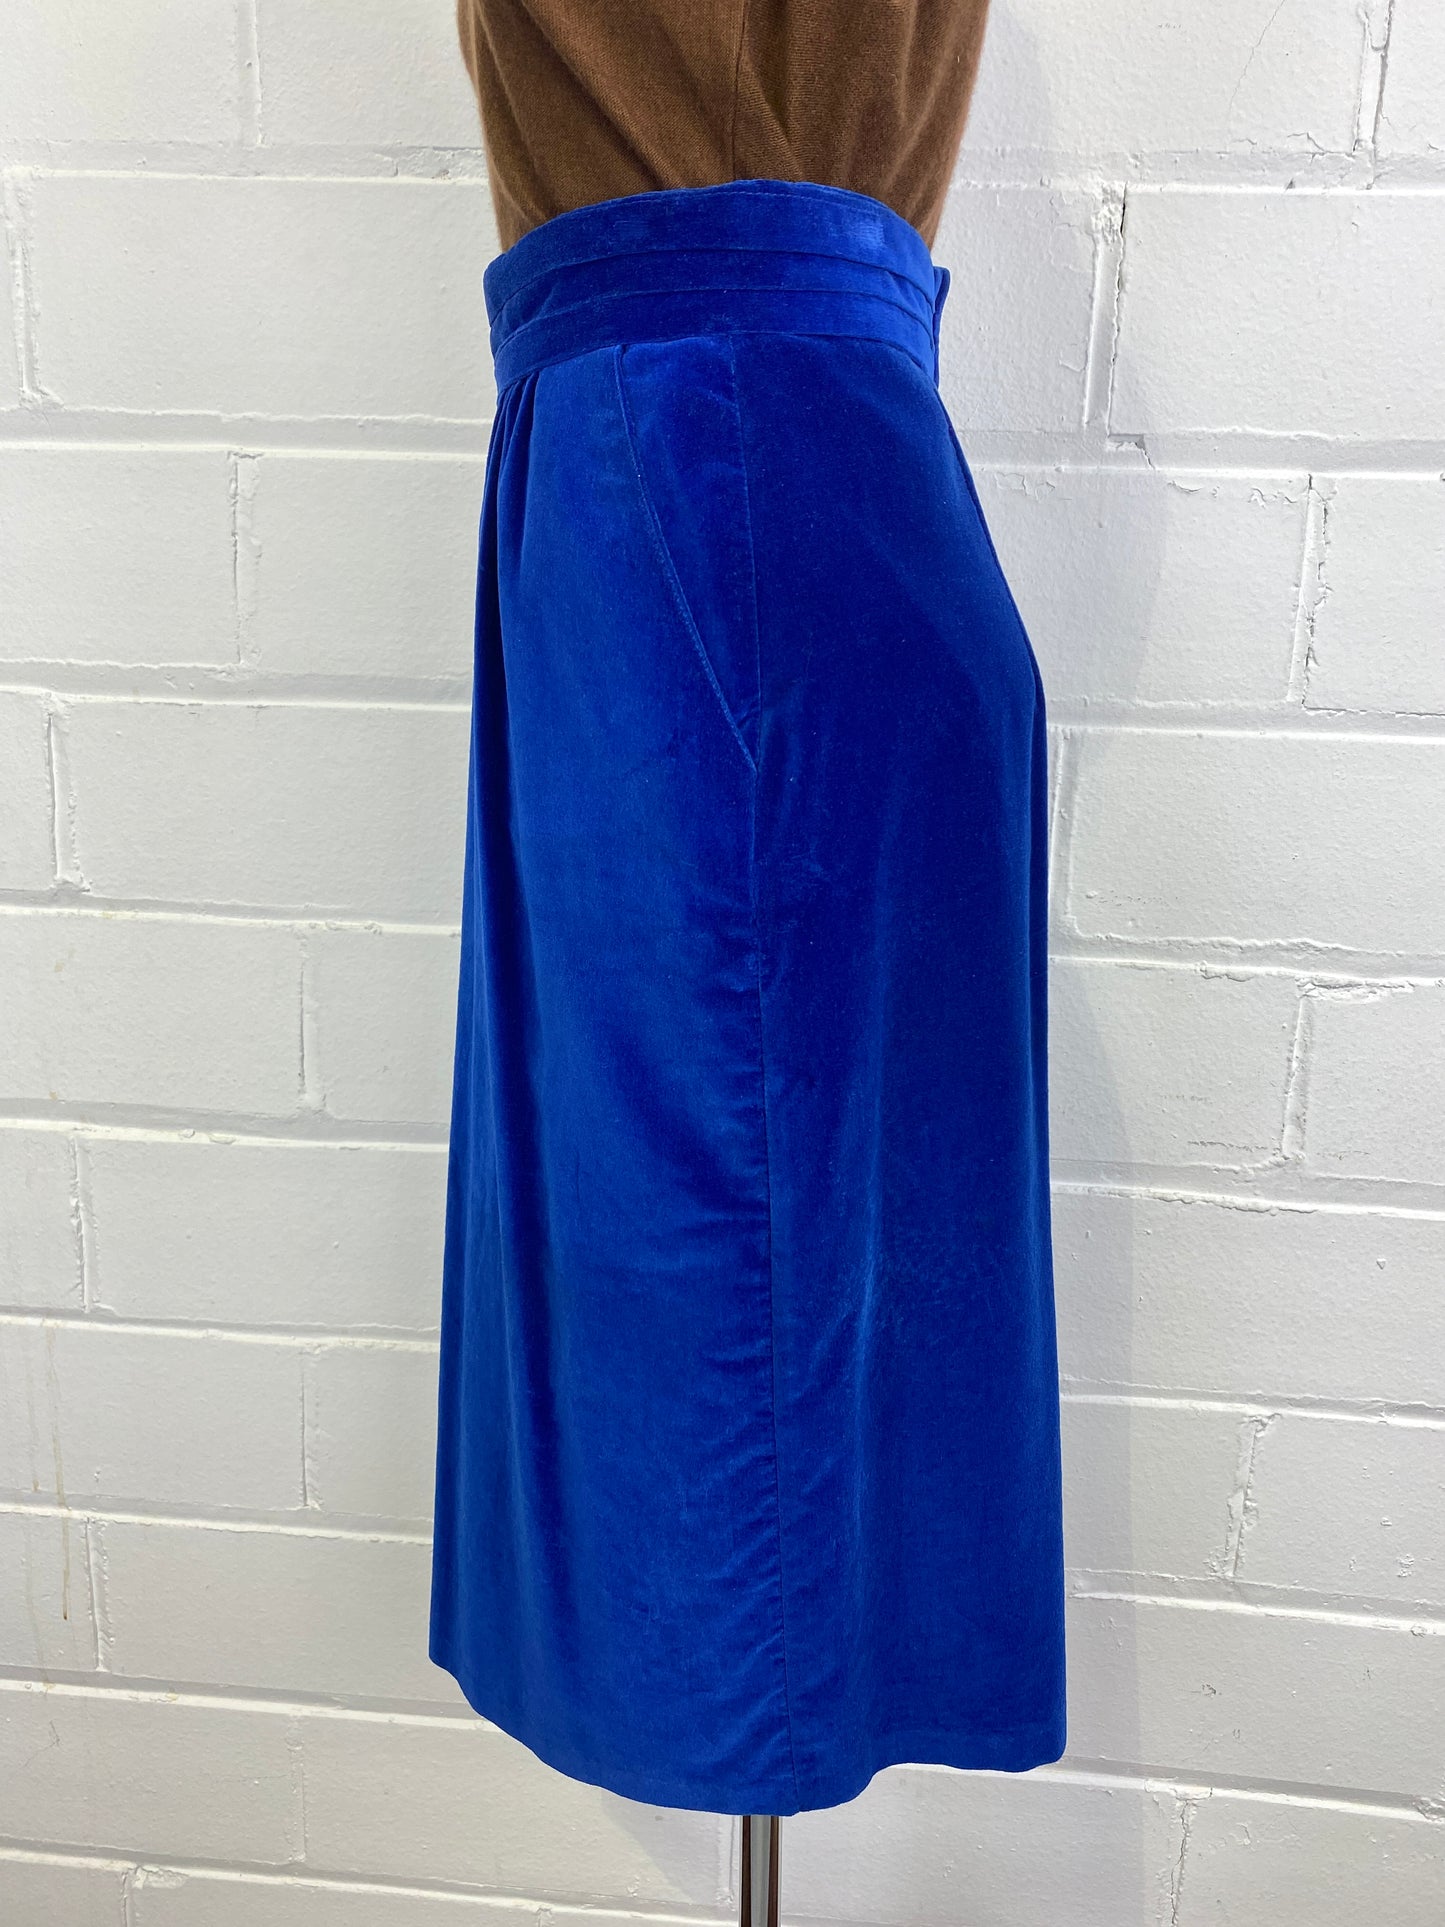 Vintage 1980s Blue Velour High-Waist Pencil Skirt, W26"